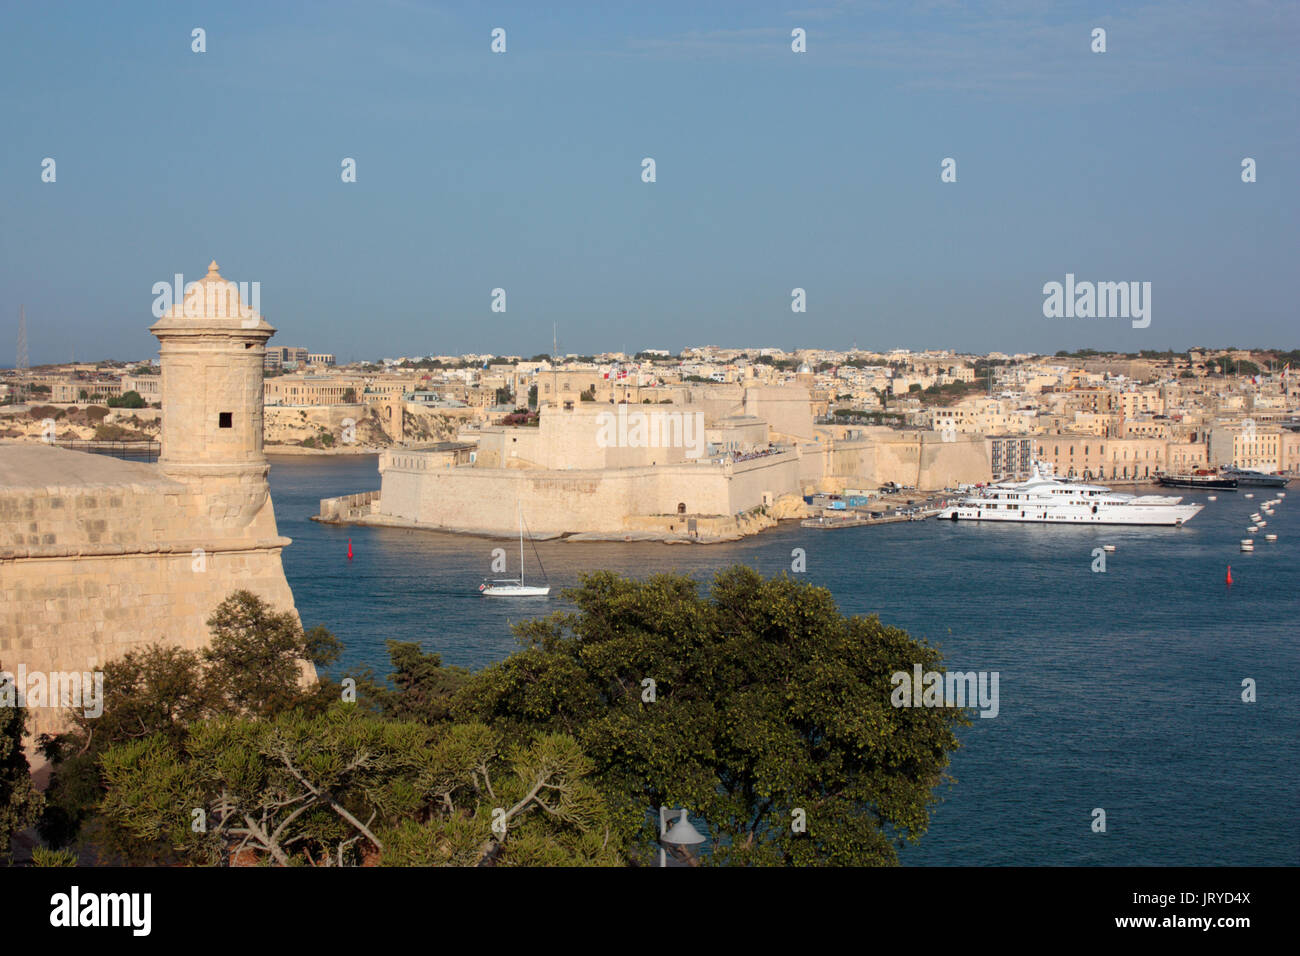 The Grand Harbour, Valletta, Malta, a historic Mediterranean travel and tourism destination. Urban Maltese landscape and history. Stock Photo